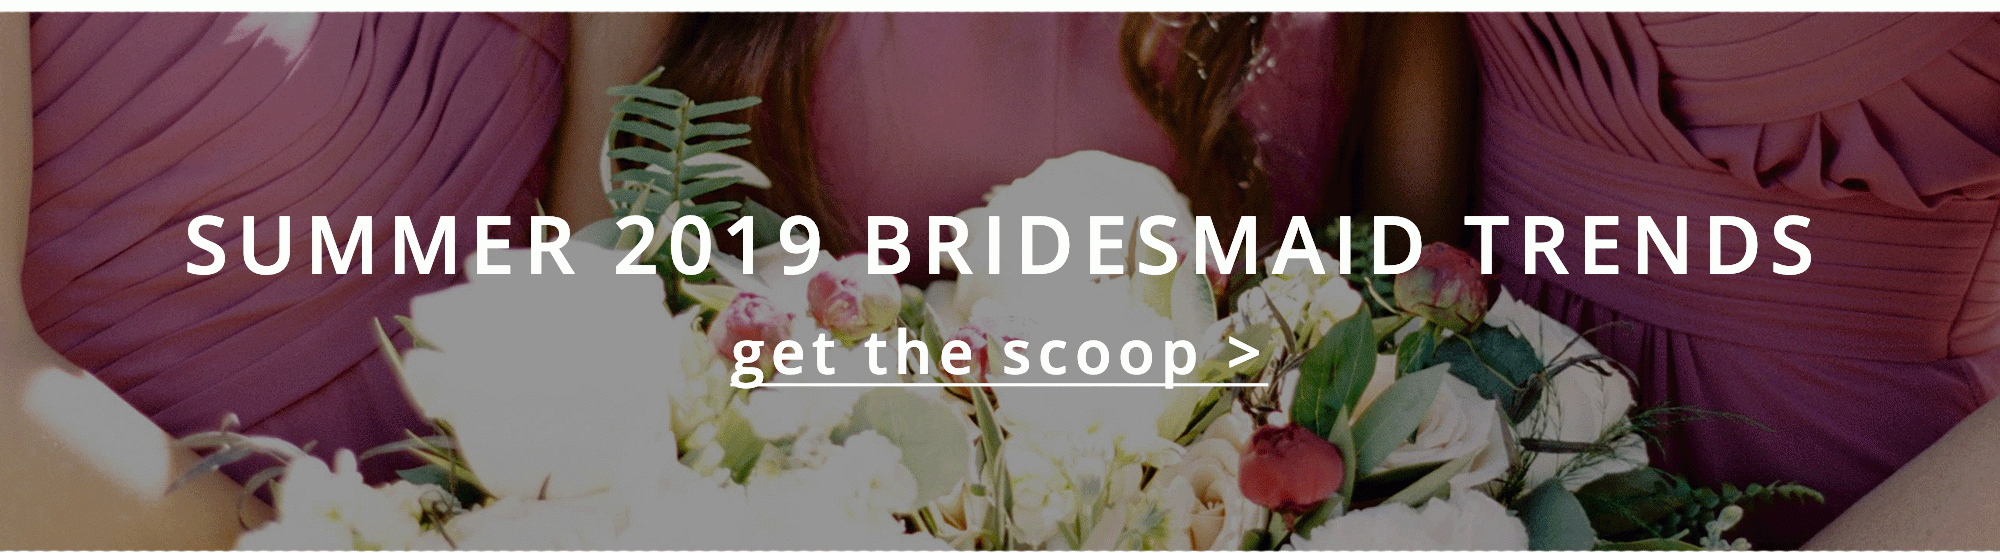 summer 2019 bridesmaid dress